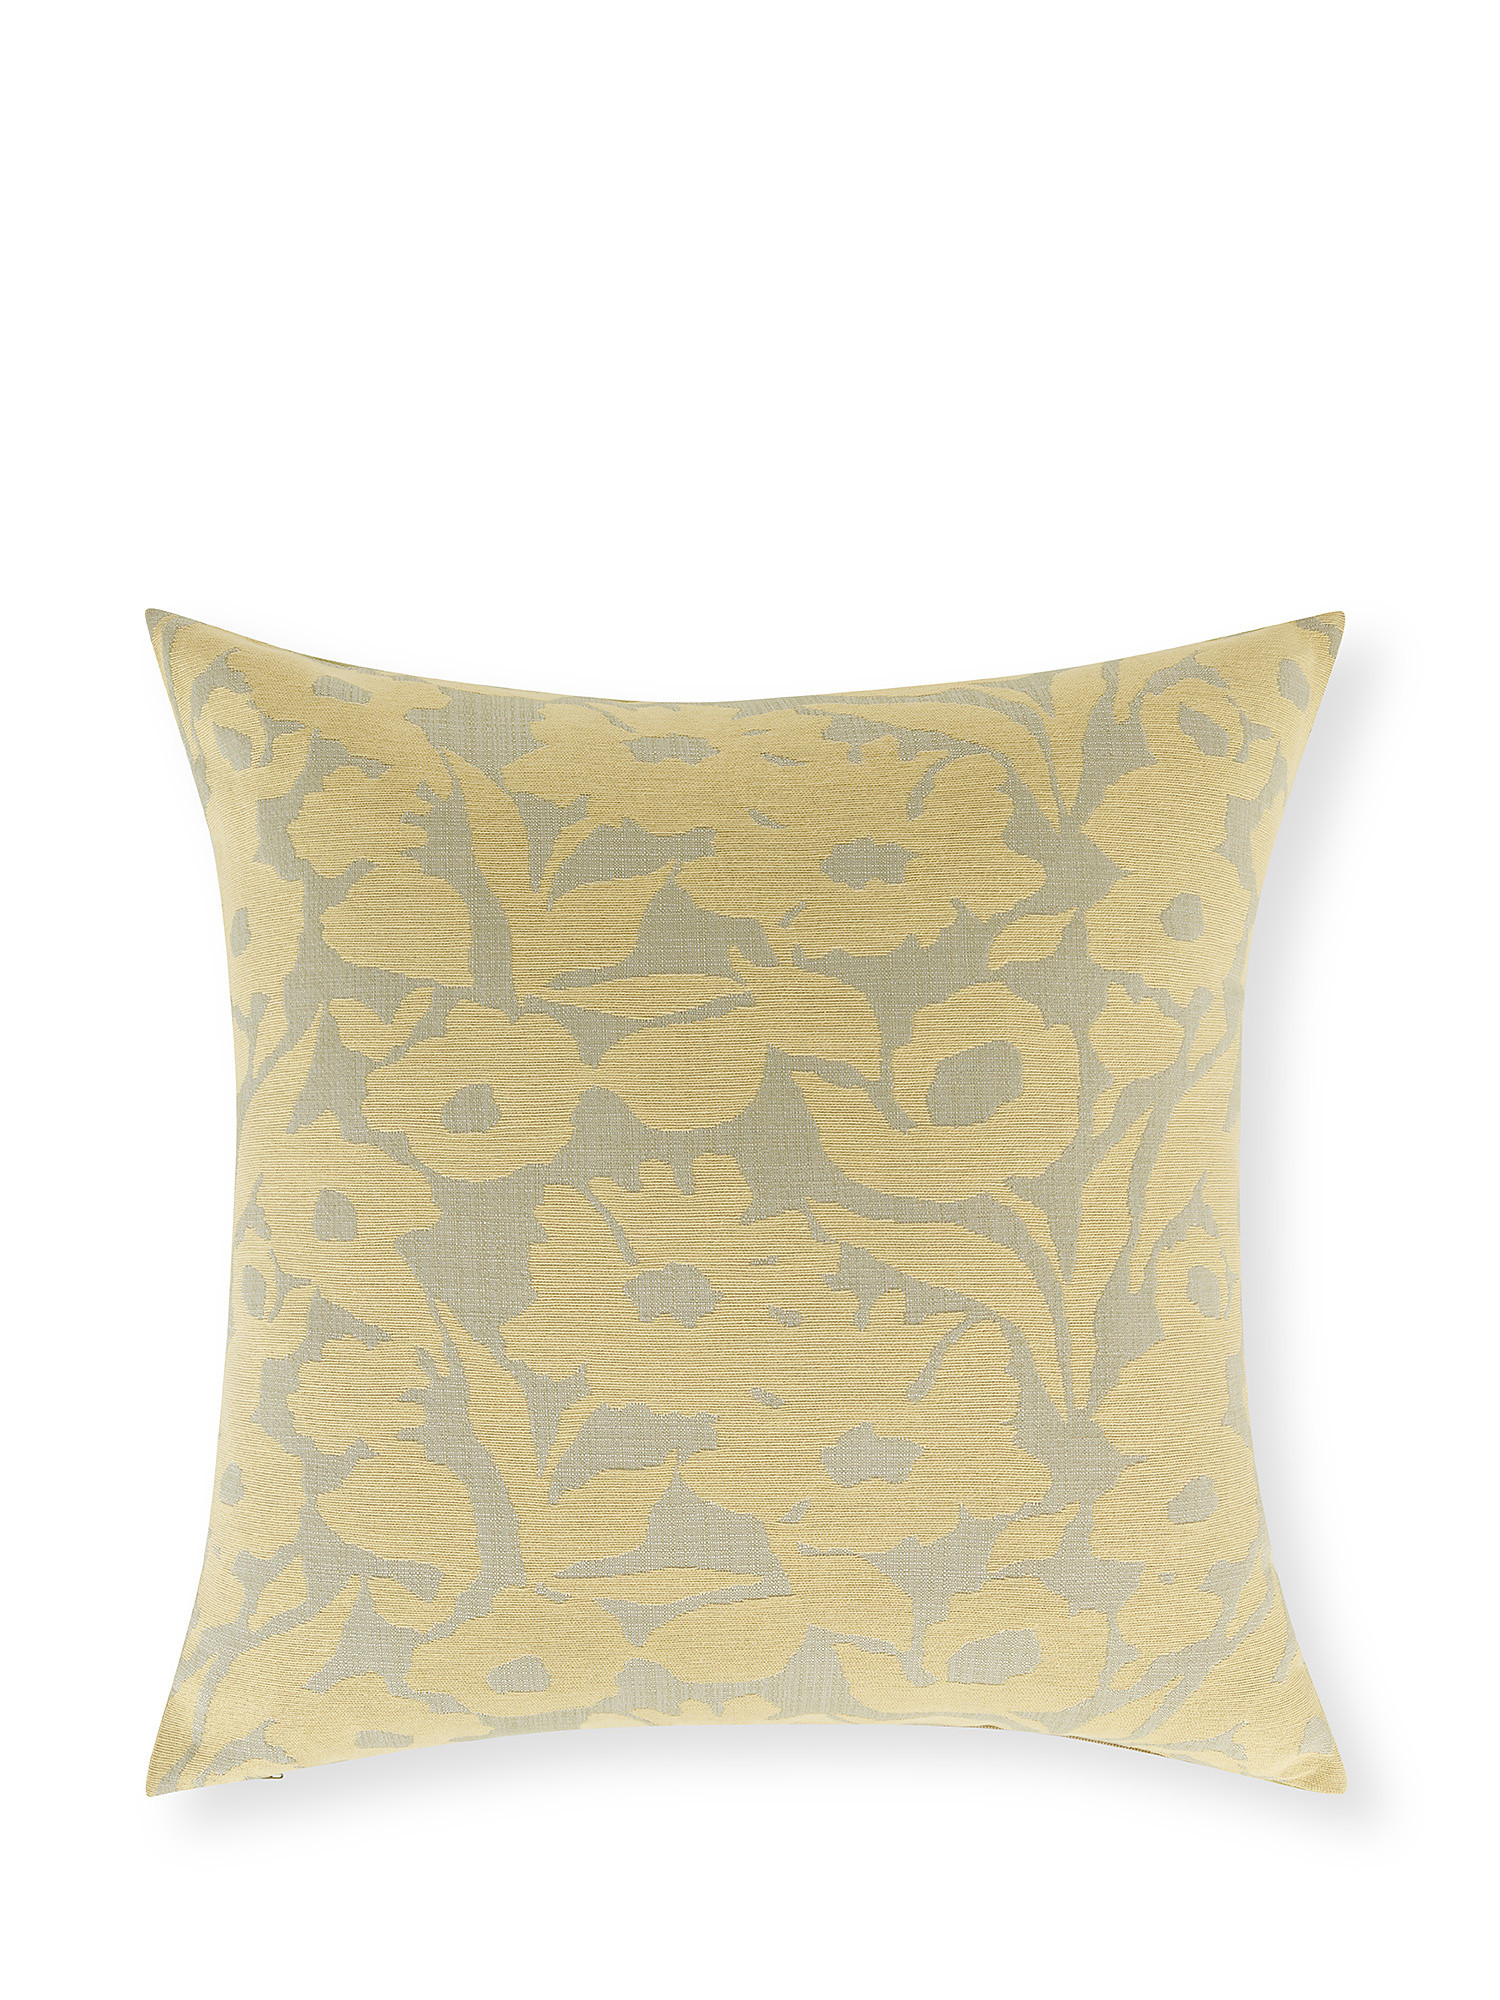 Jacquard cushion with flower motif 45x45cm, Beige, large image number 0